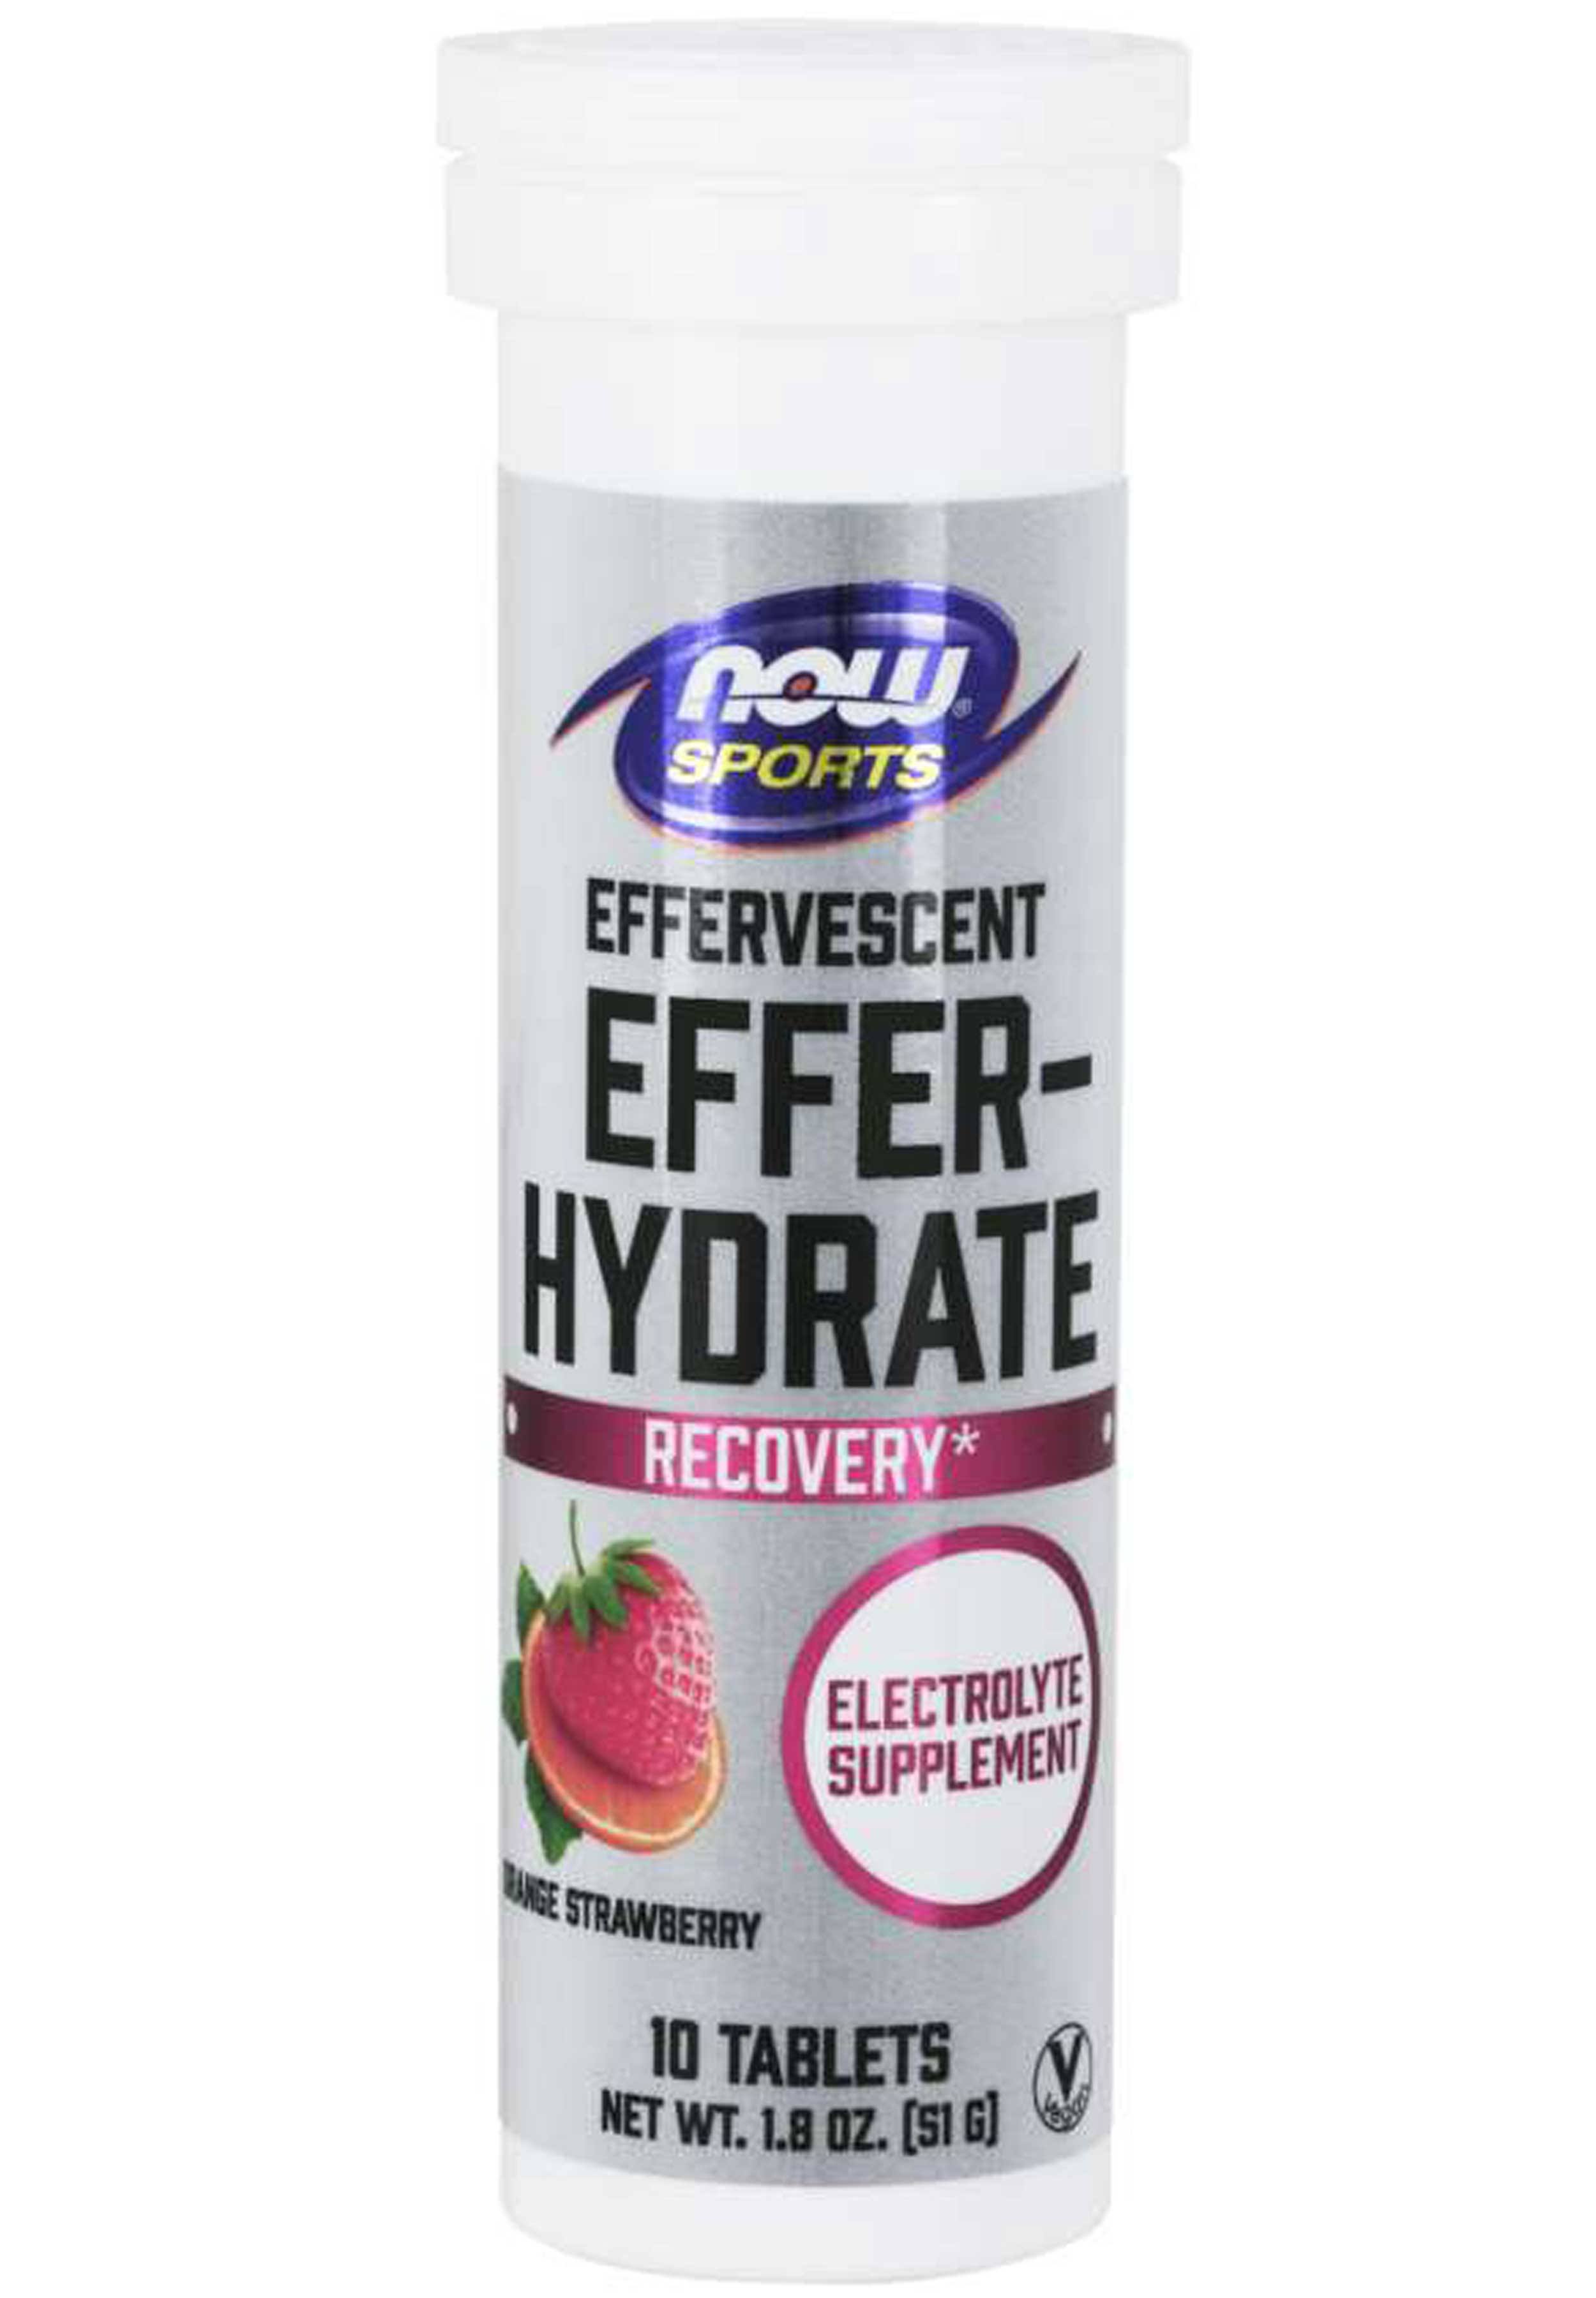 NOW Foods Effer-Hydrate Effervescent - 10 Tablets Orange Strawberry